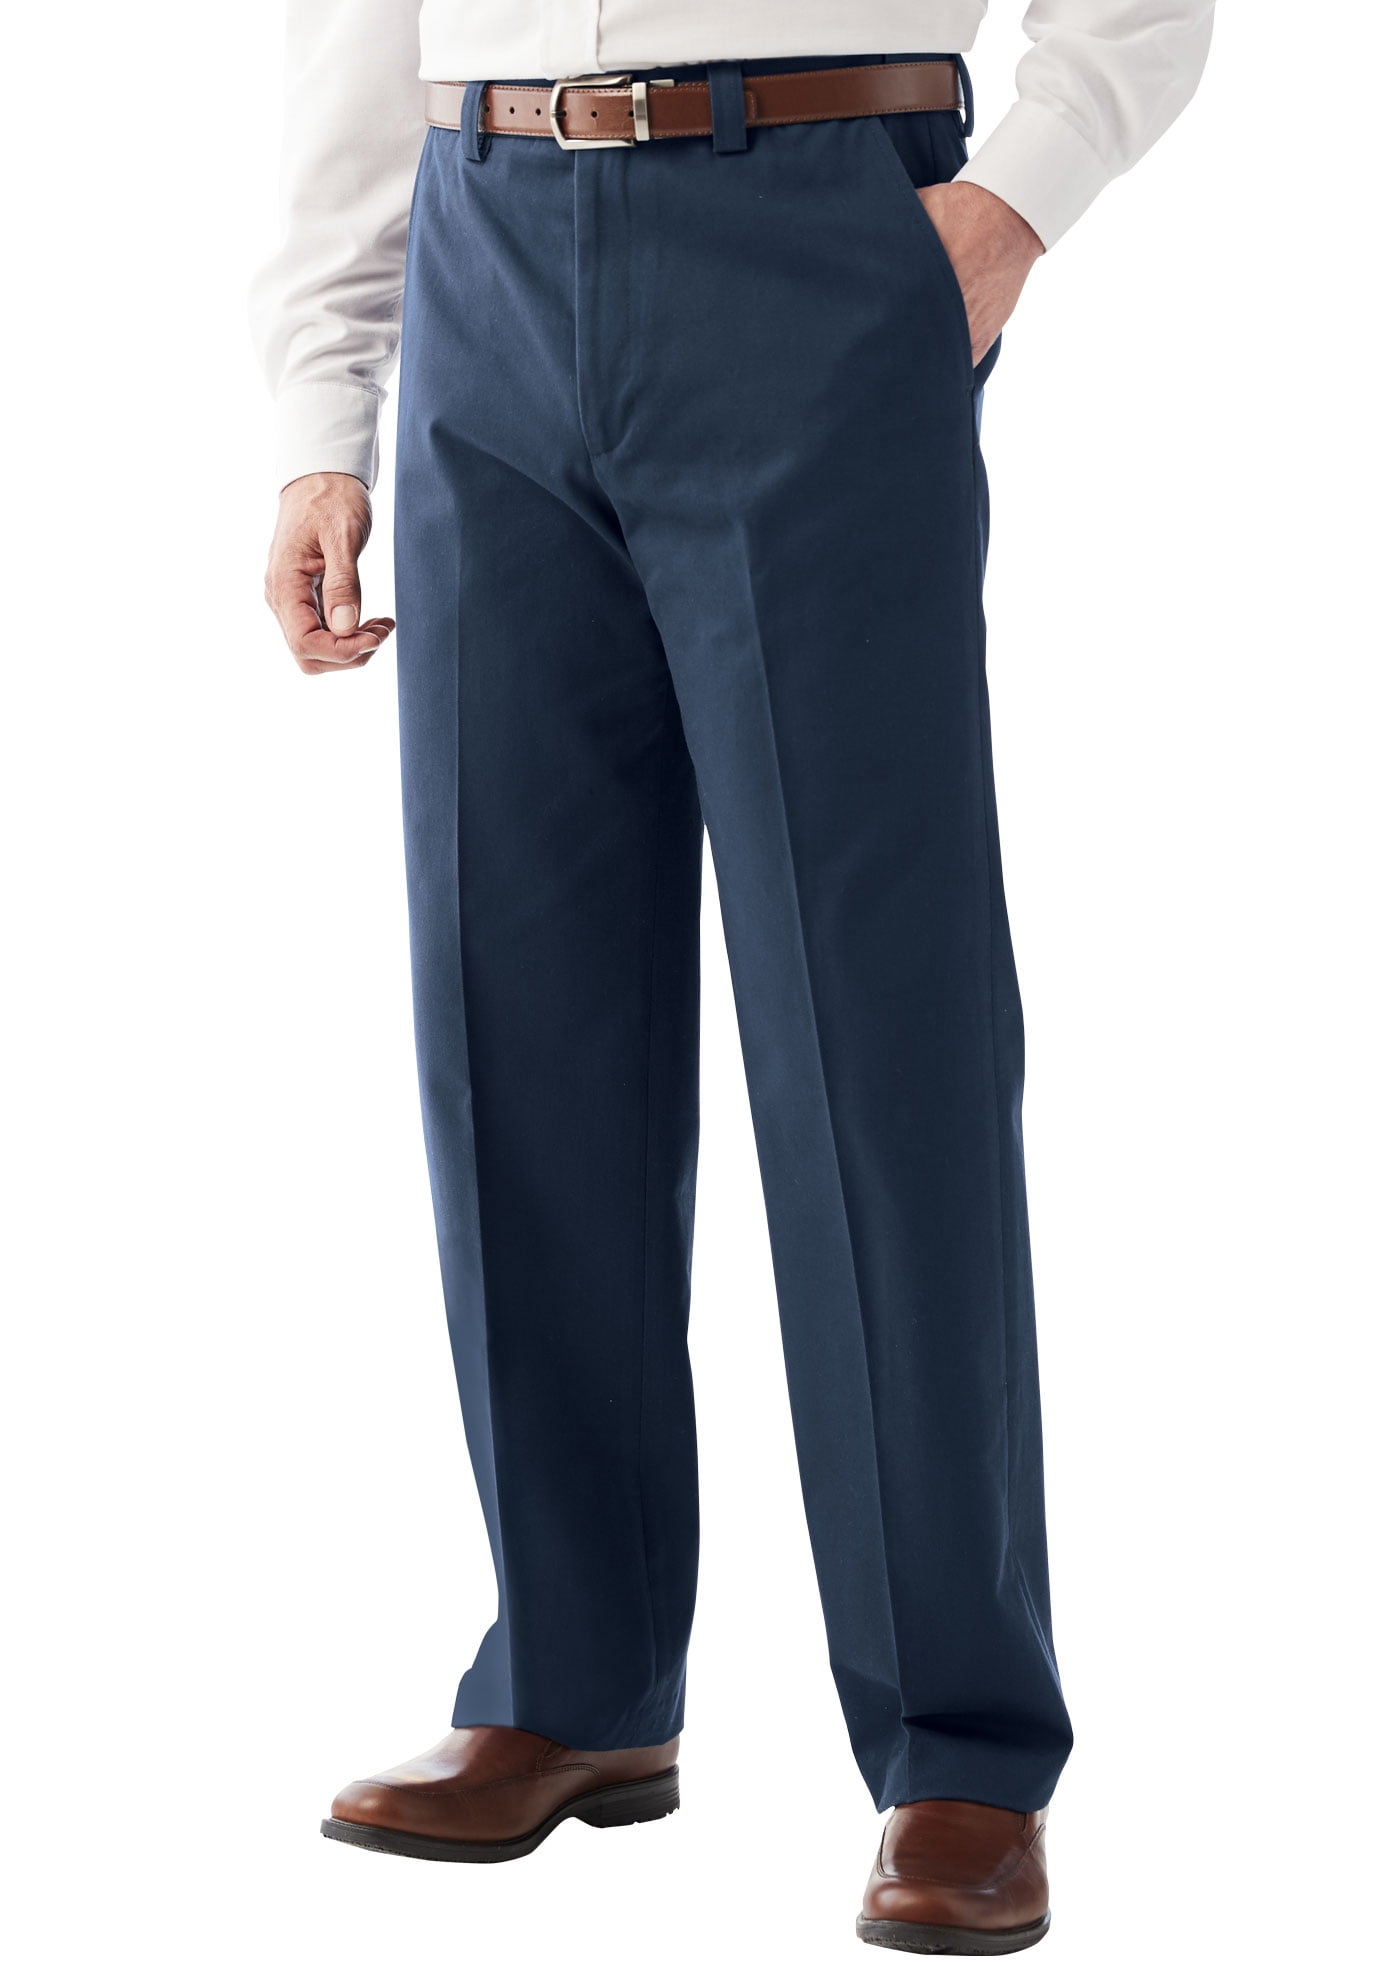 Dress Pants | Tailored Pants | Men's Pants | The Shirt Bar Online Store